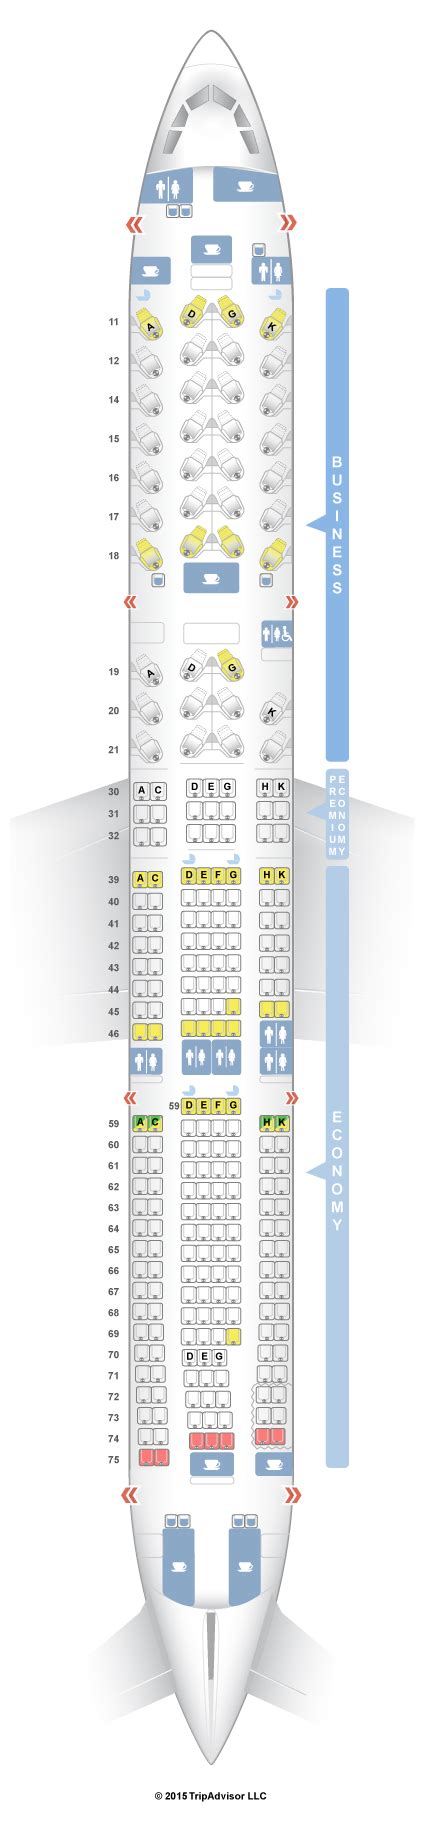 Cathay Pacific Aircraft 359 Seat Map